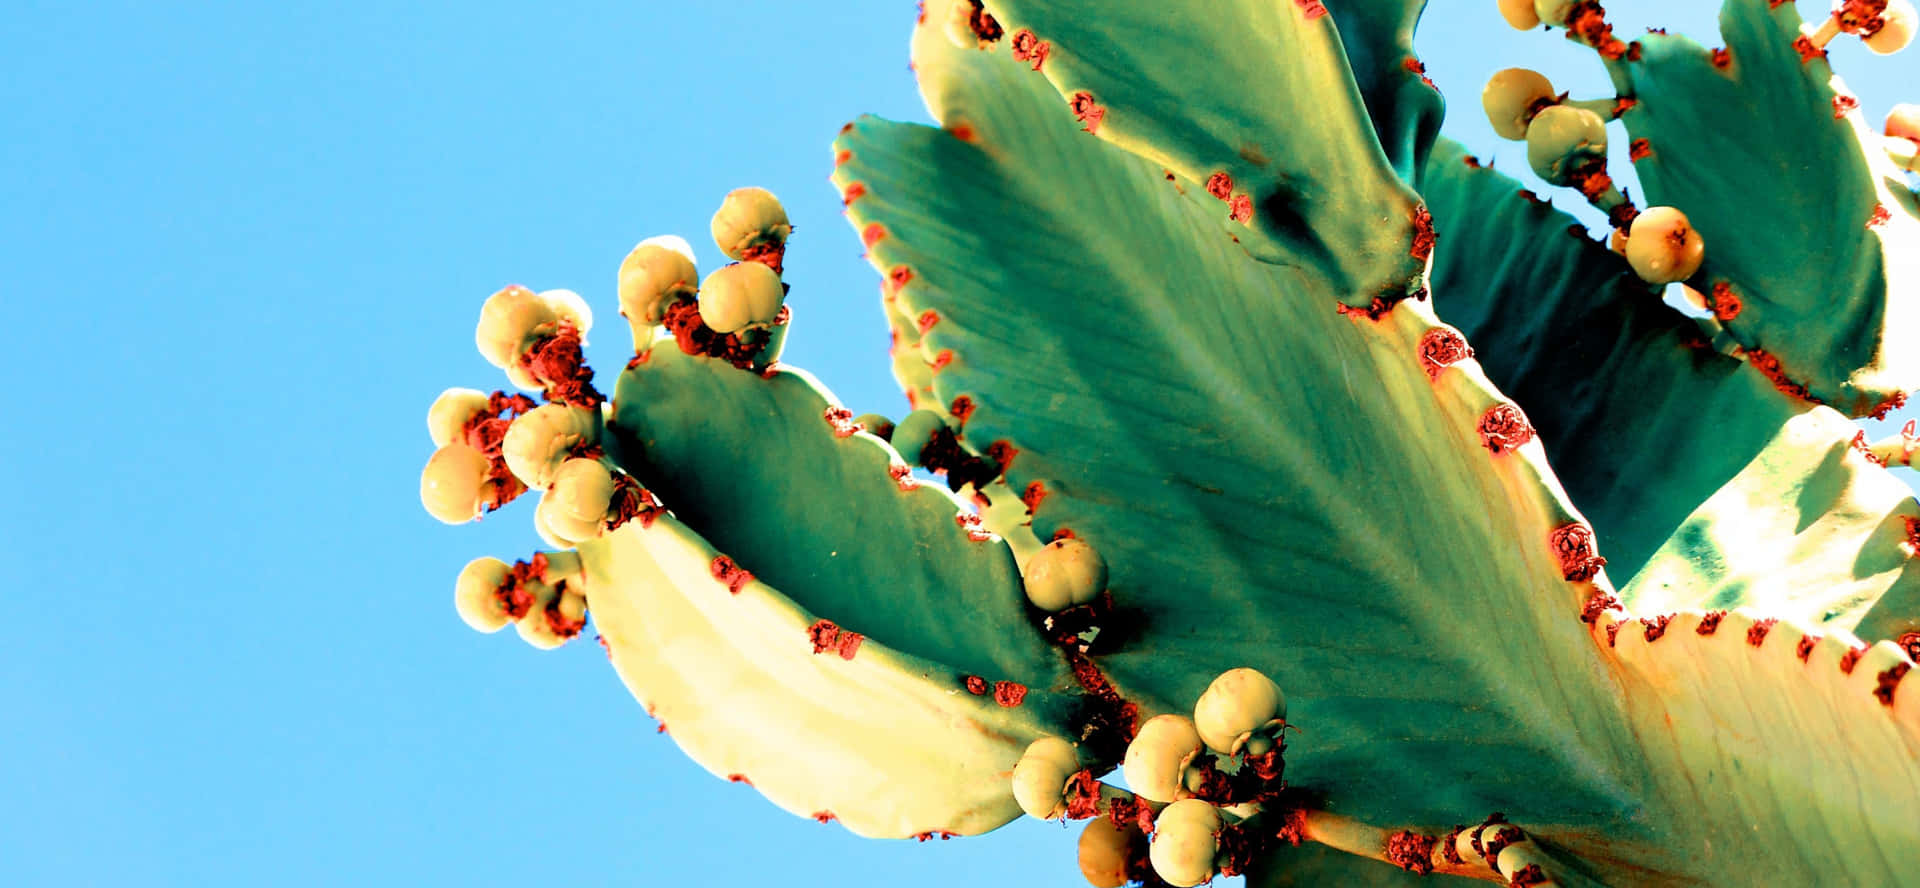 Immagineestiva Di Un Cactus Sanguinante